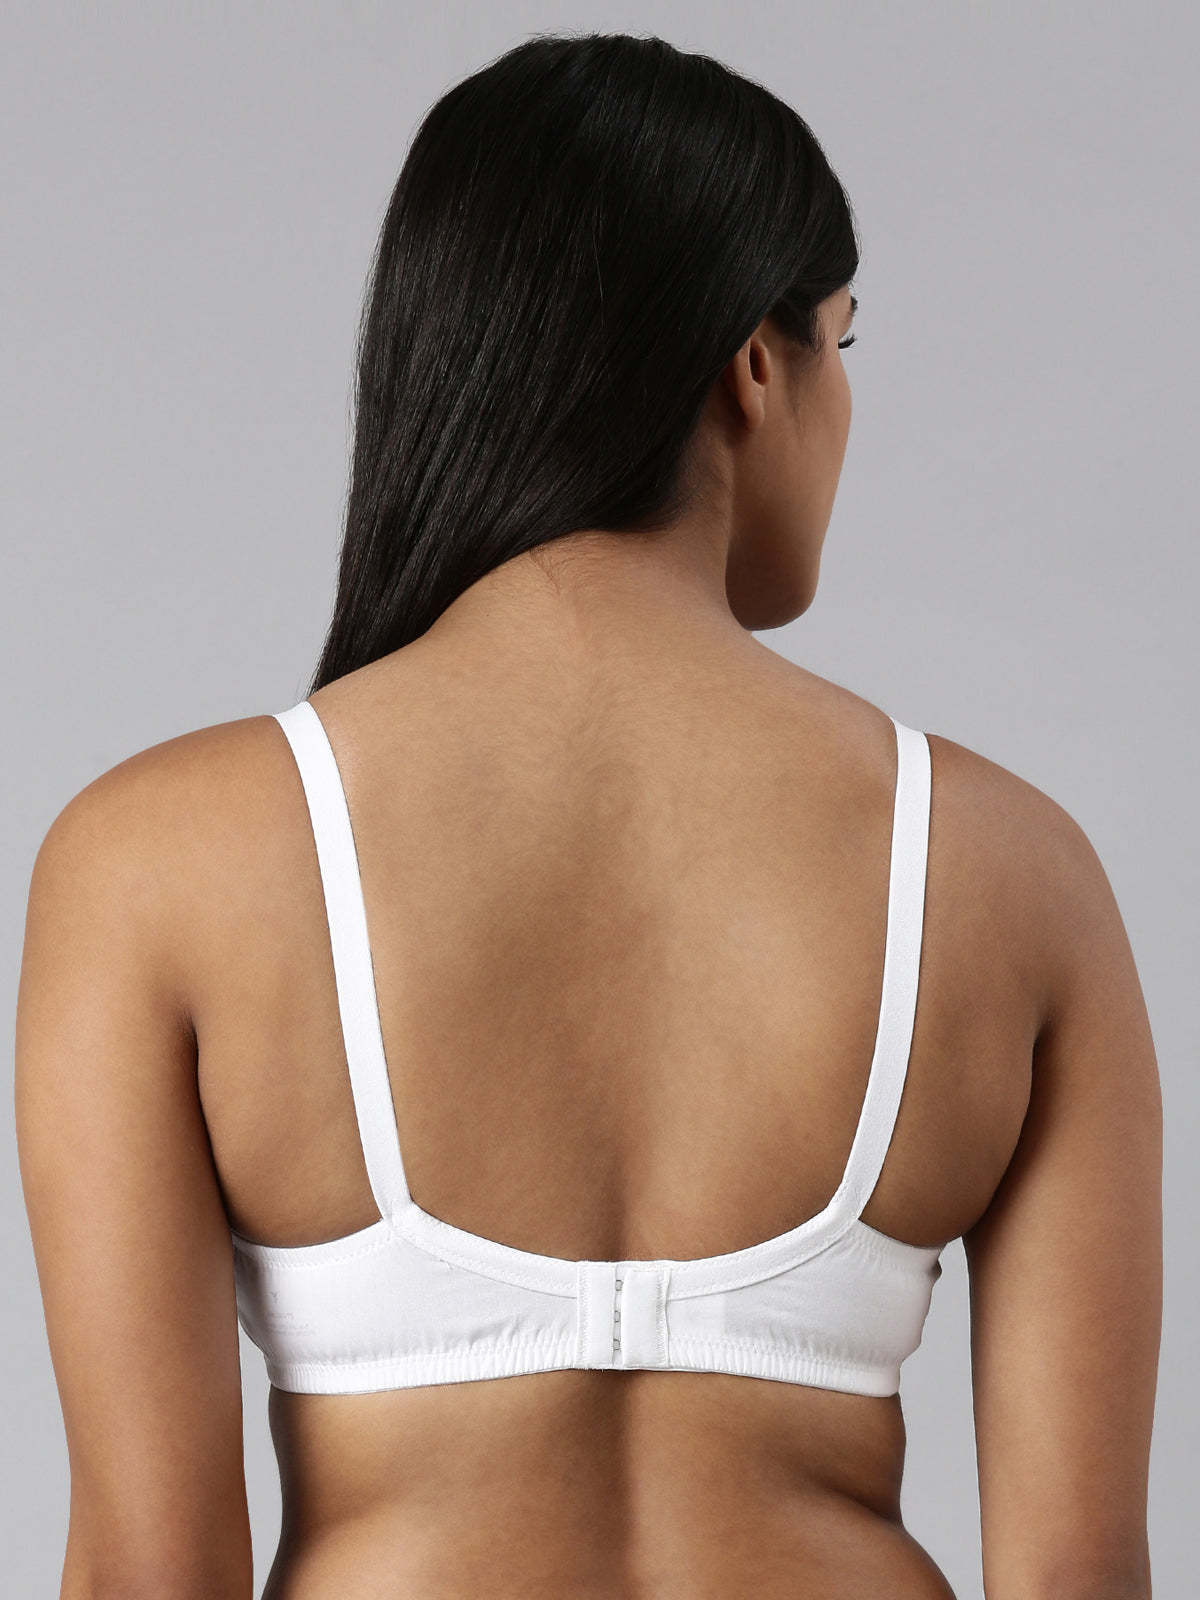 blossom-ethnic bra-white5-woven cotton-everyday bra